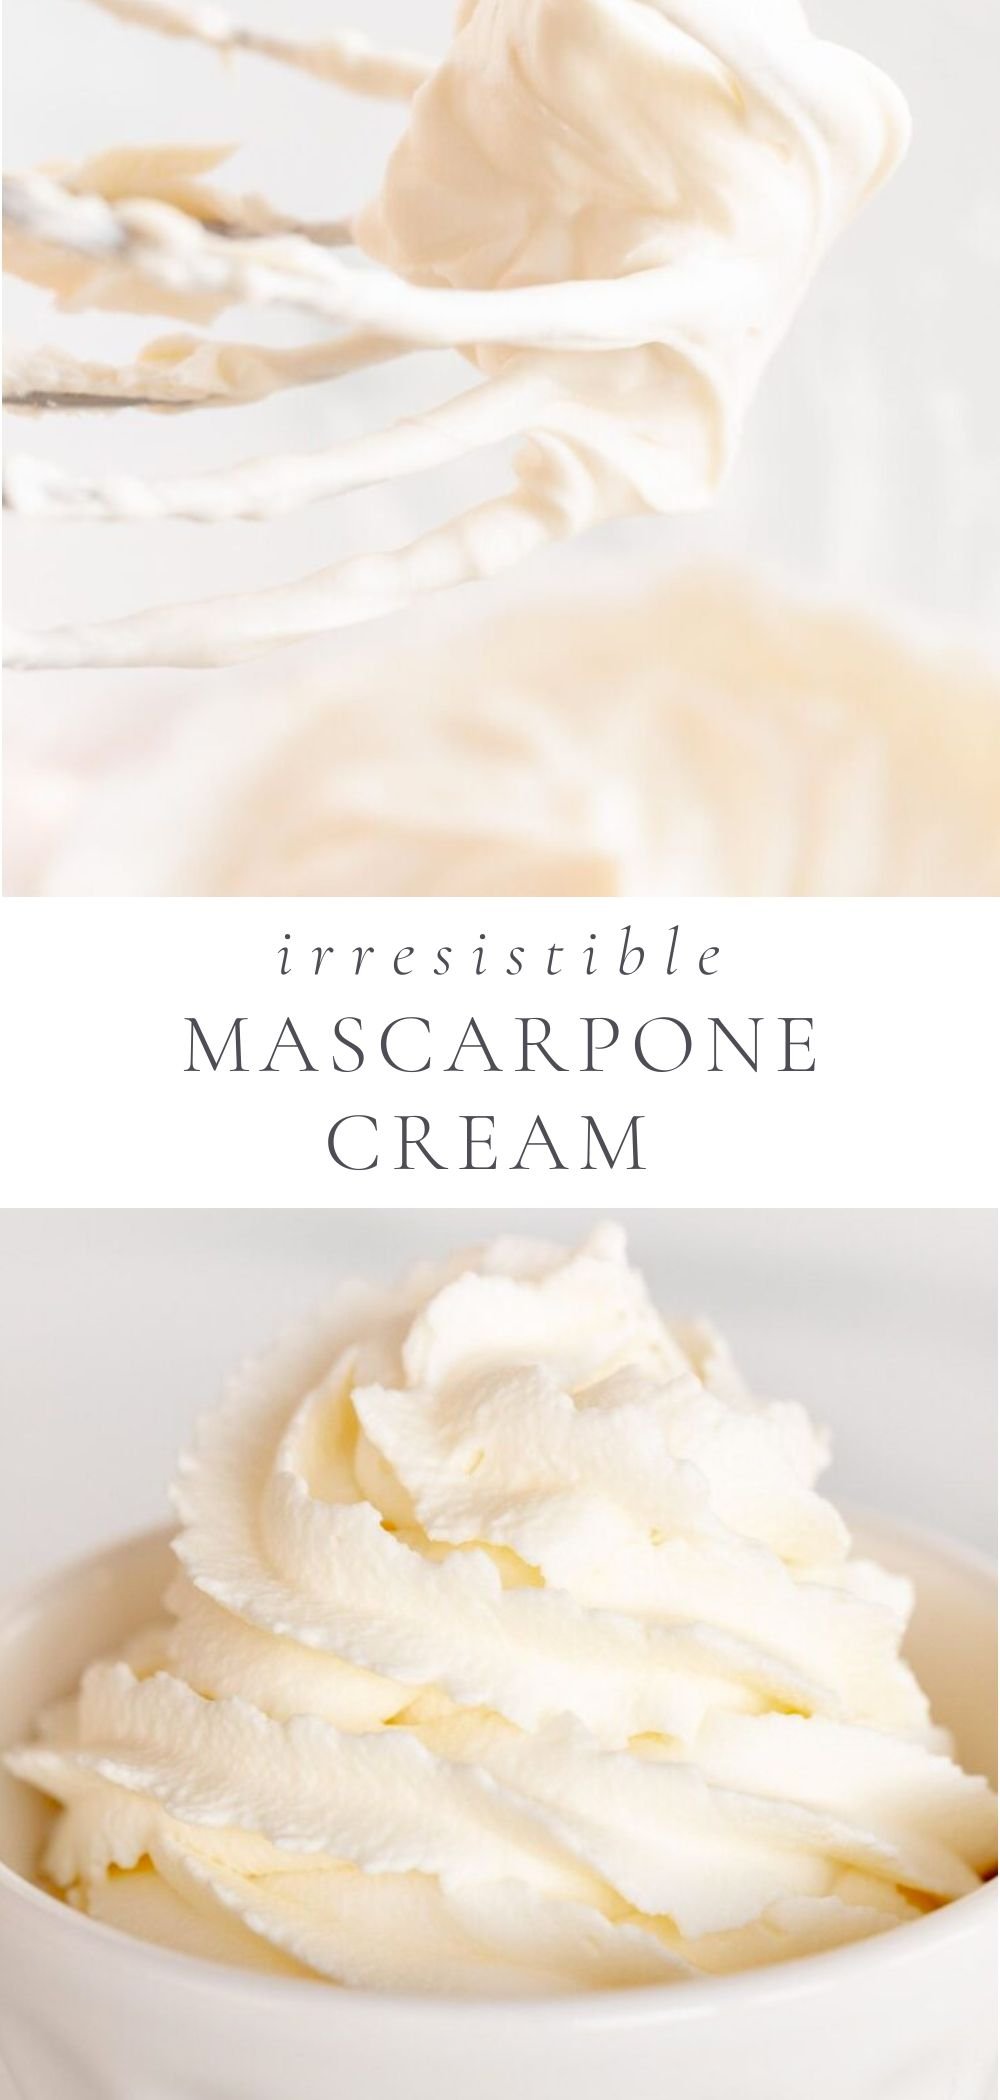 mascarpone cream in white bowl